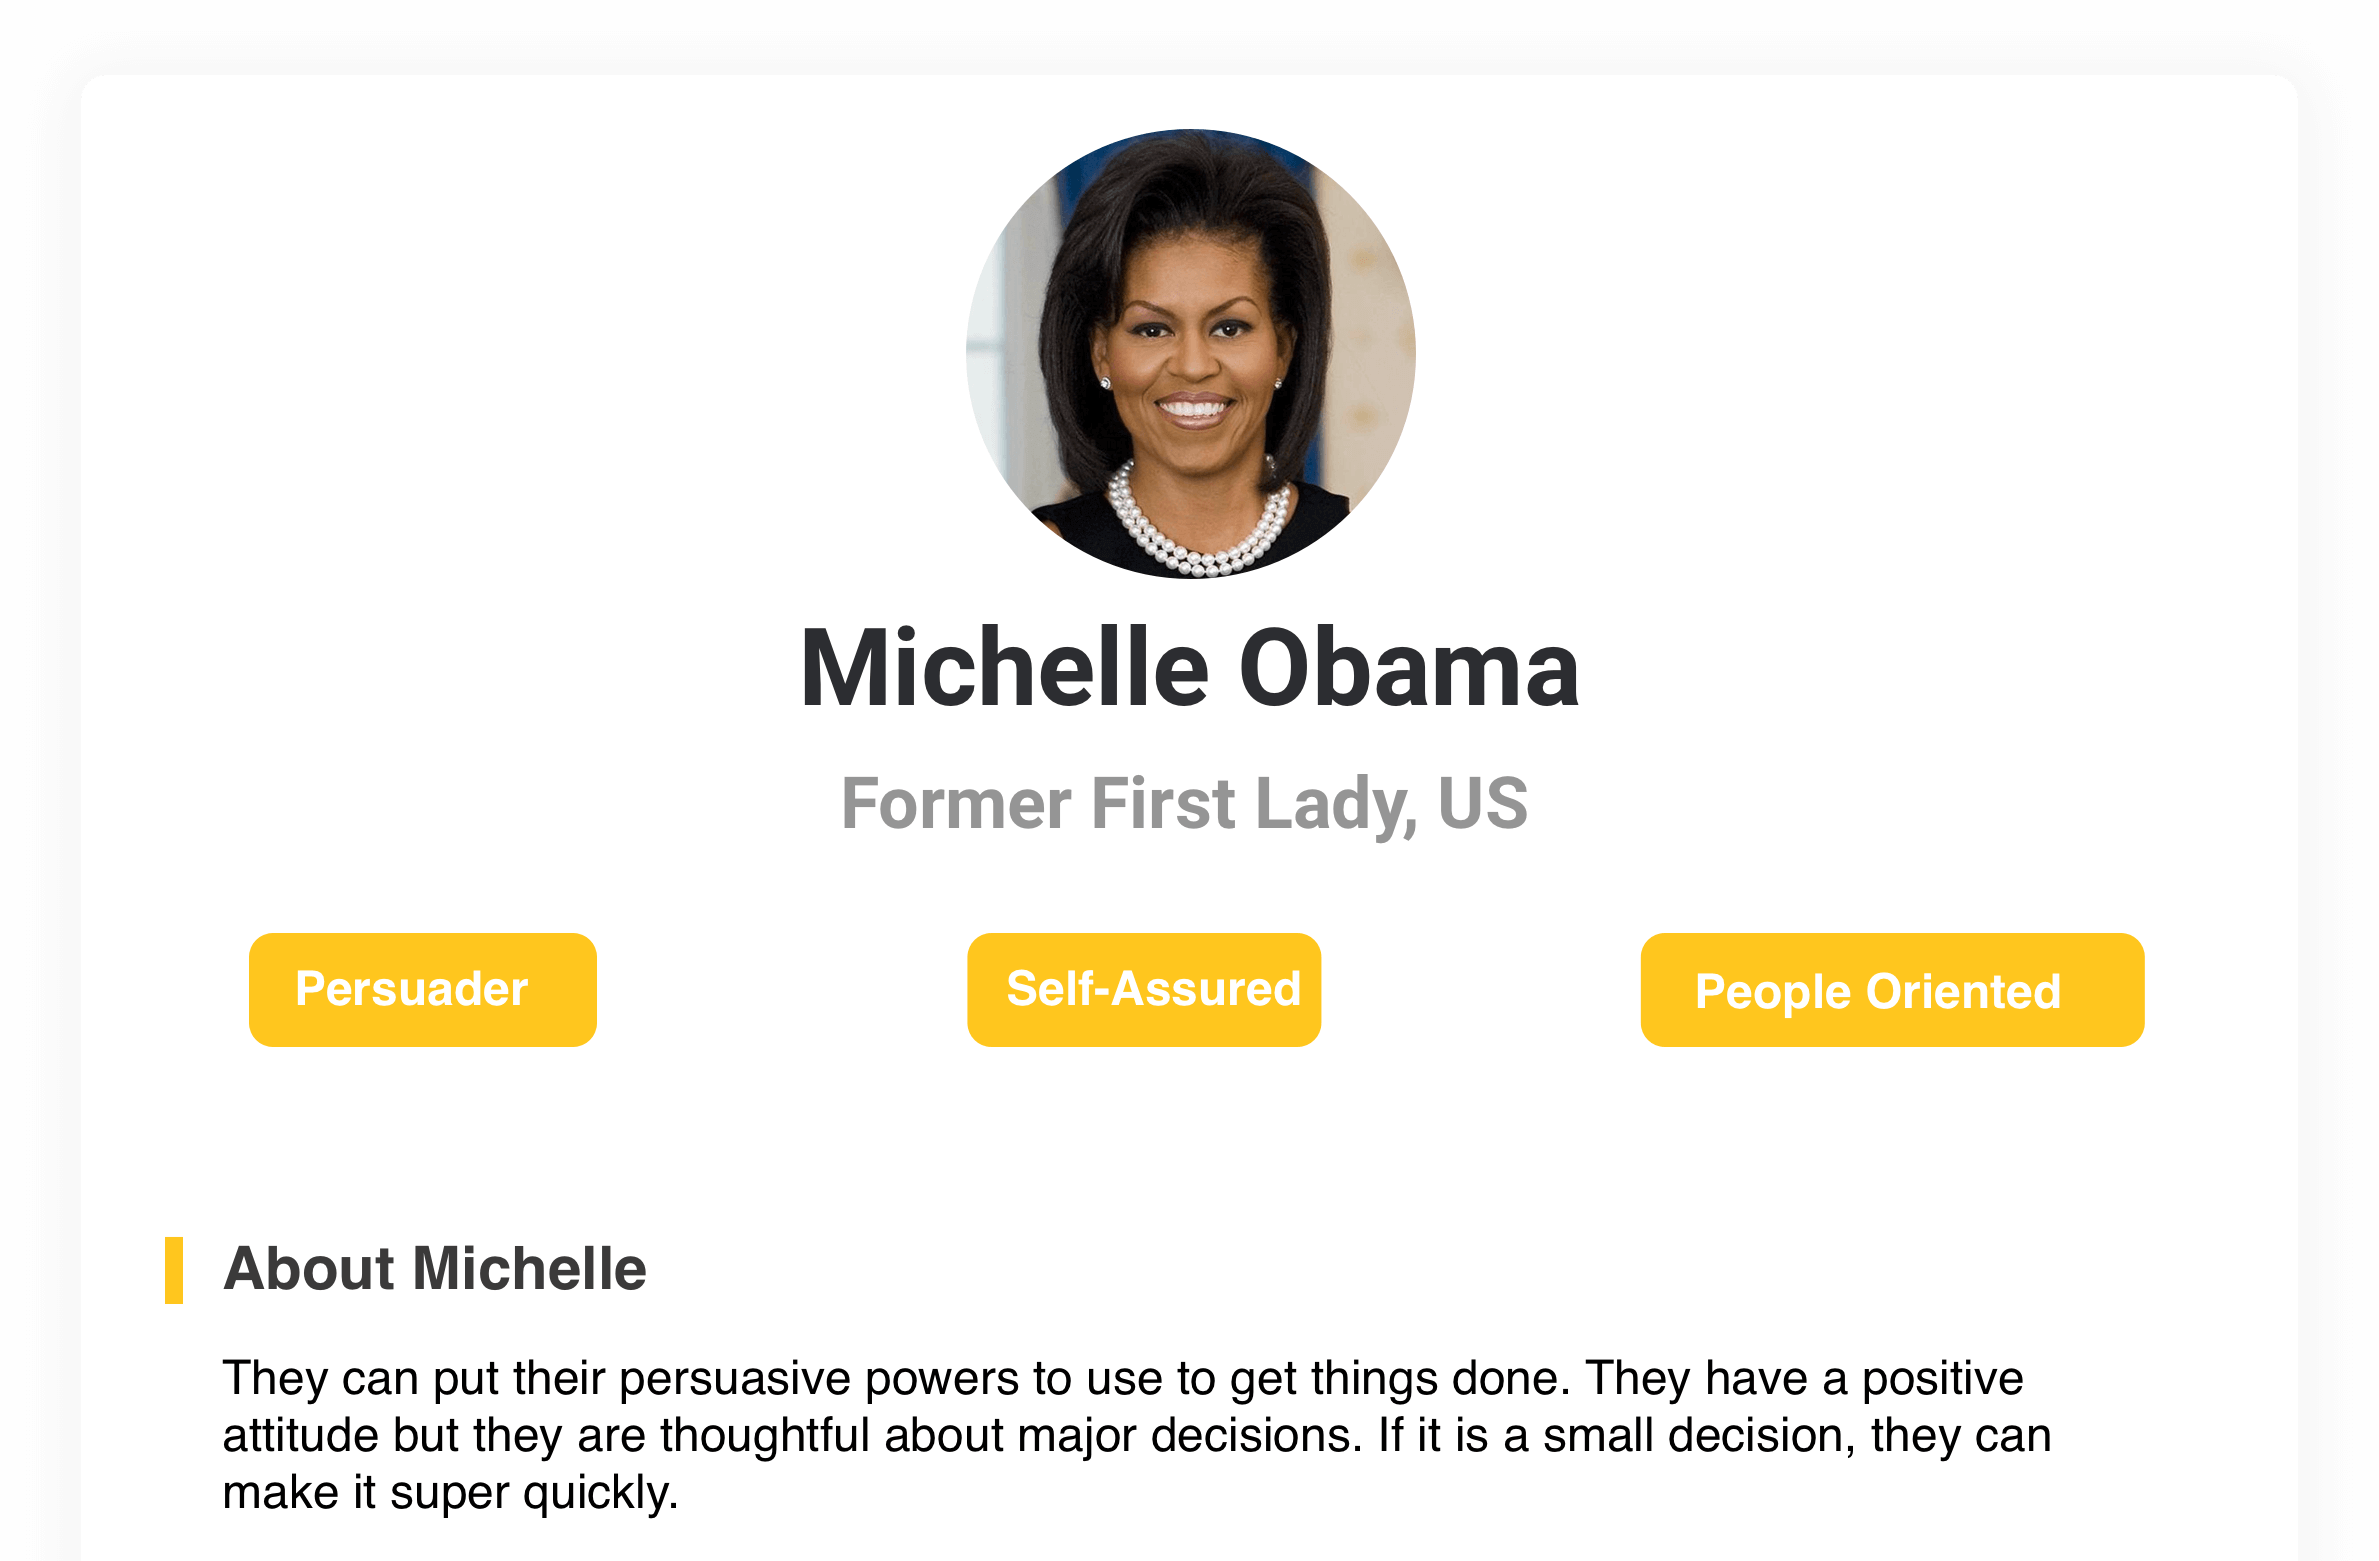 About Michelle